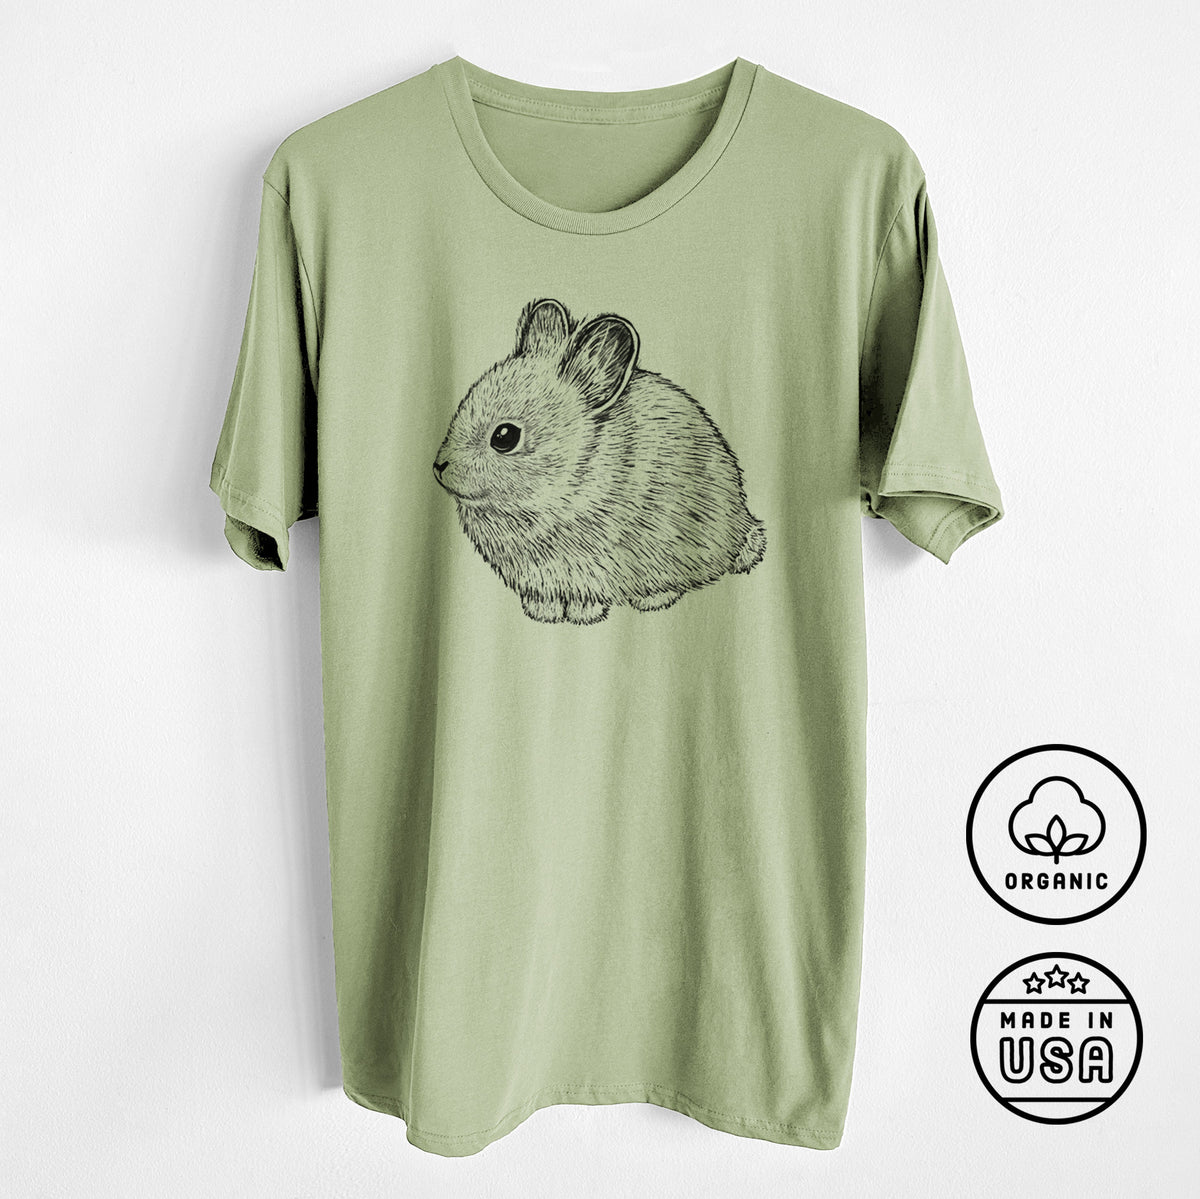 Columbia Basin Pygmy Rabbit - Unisex Crewneck - Made in USA - 100% Organic Cotton